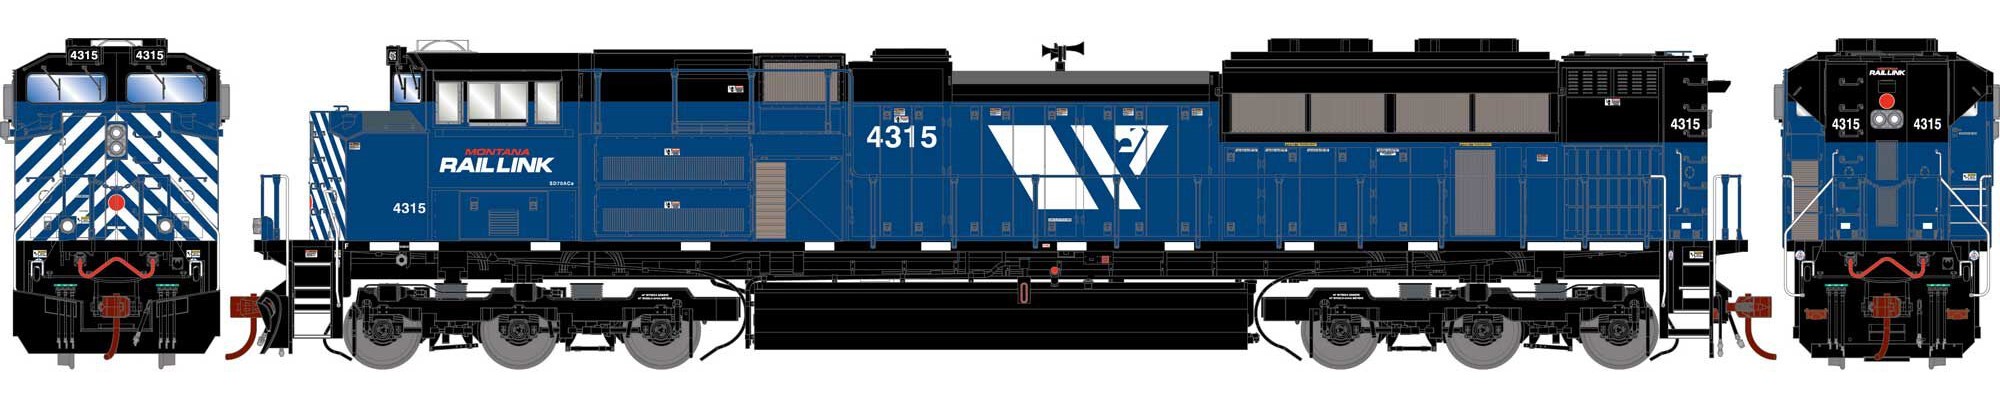 Athearn Genesis HO ATHG75748 DCC Ready EMD SD70ACe Locomotive Montana Rail Link MRL #4315